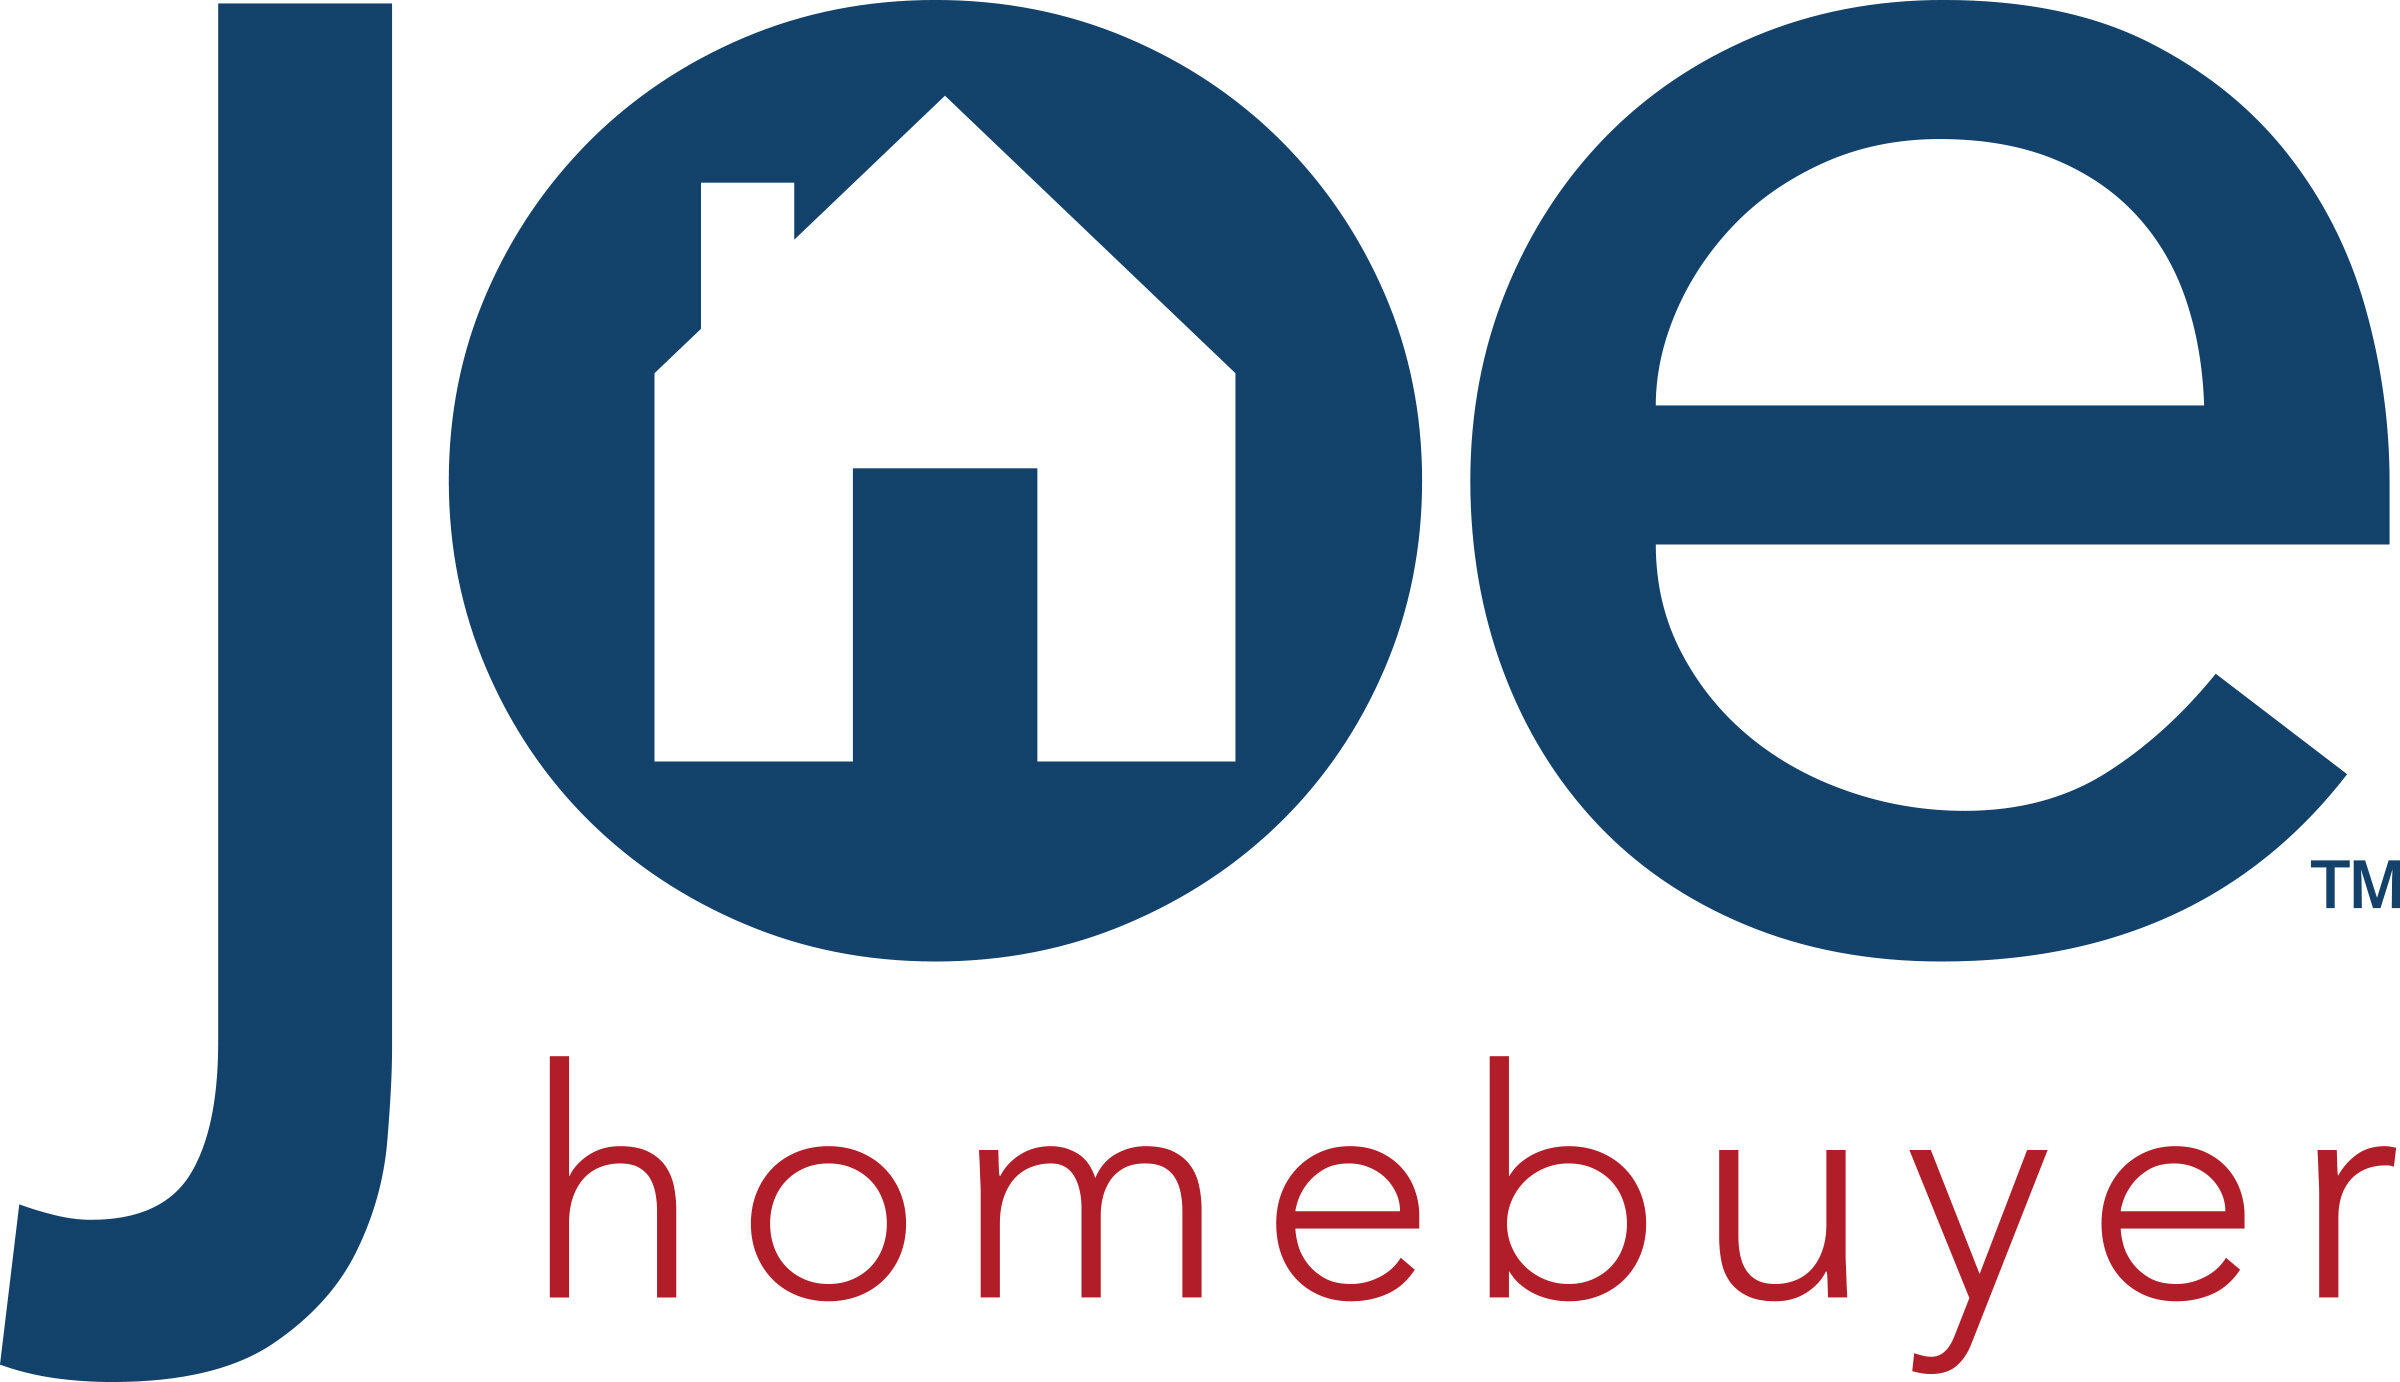 Joe Homebuyer Boise logo